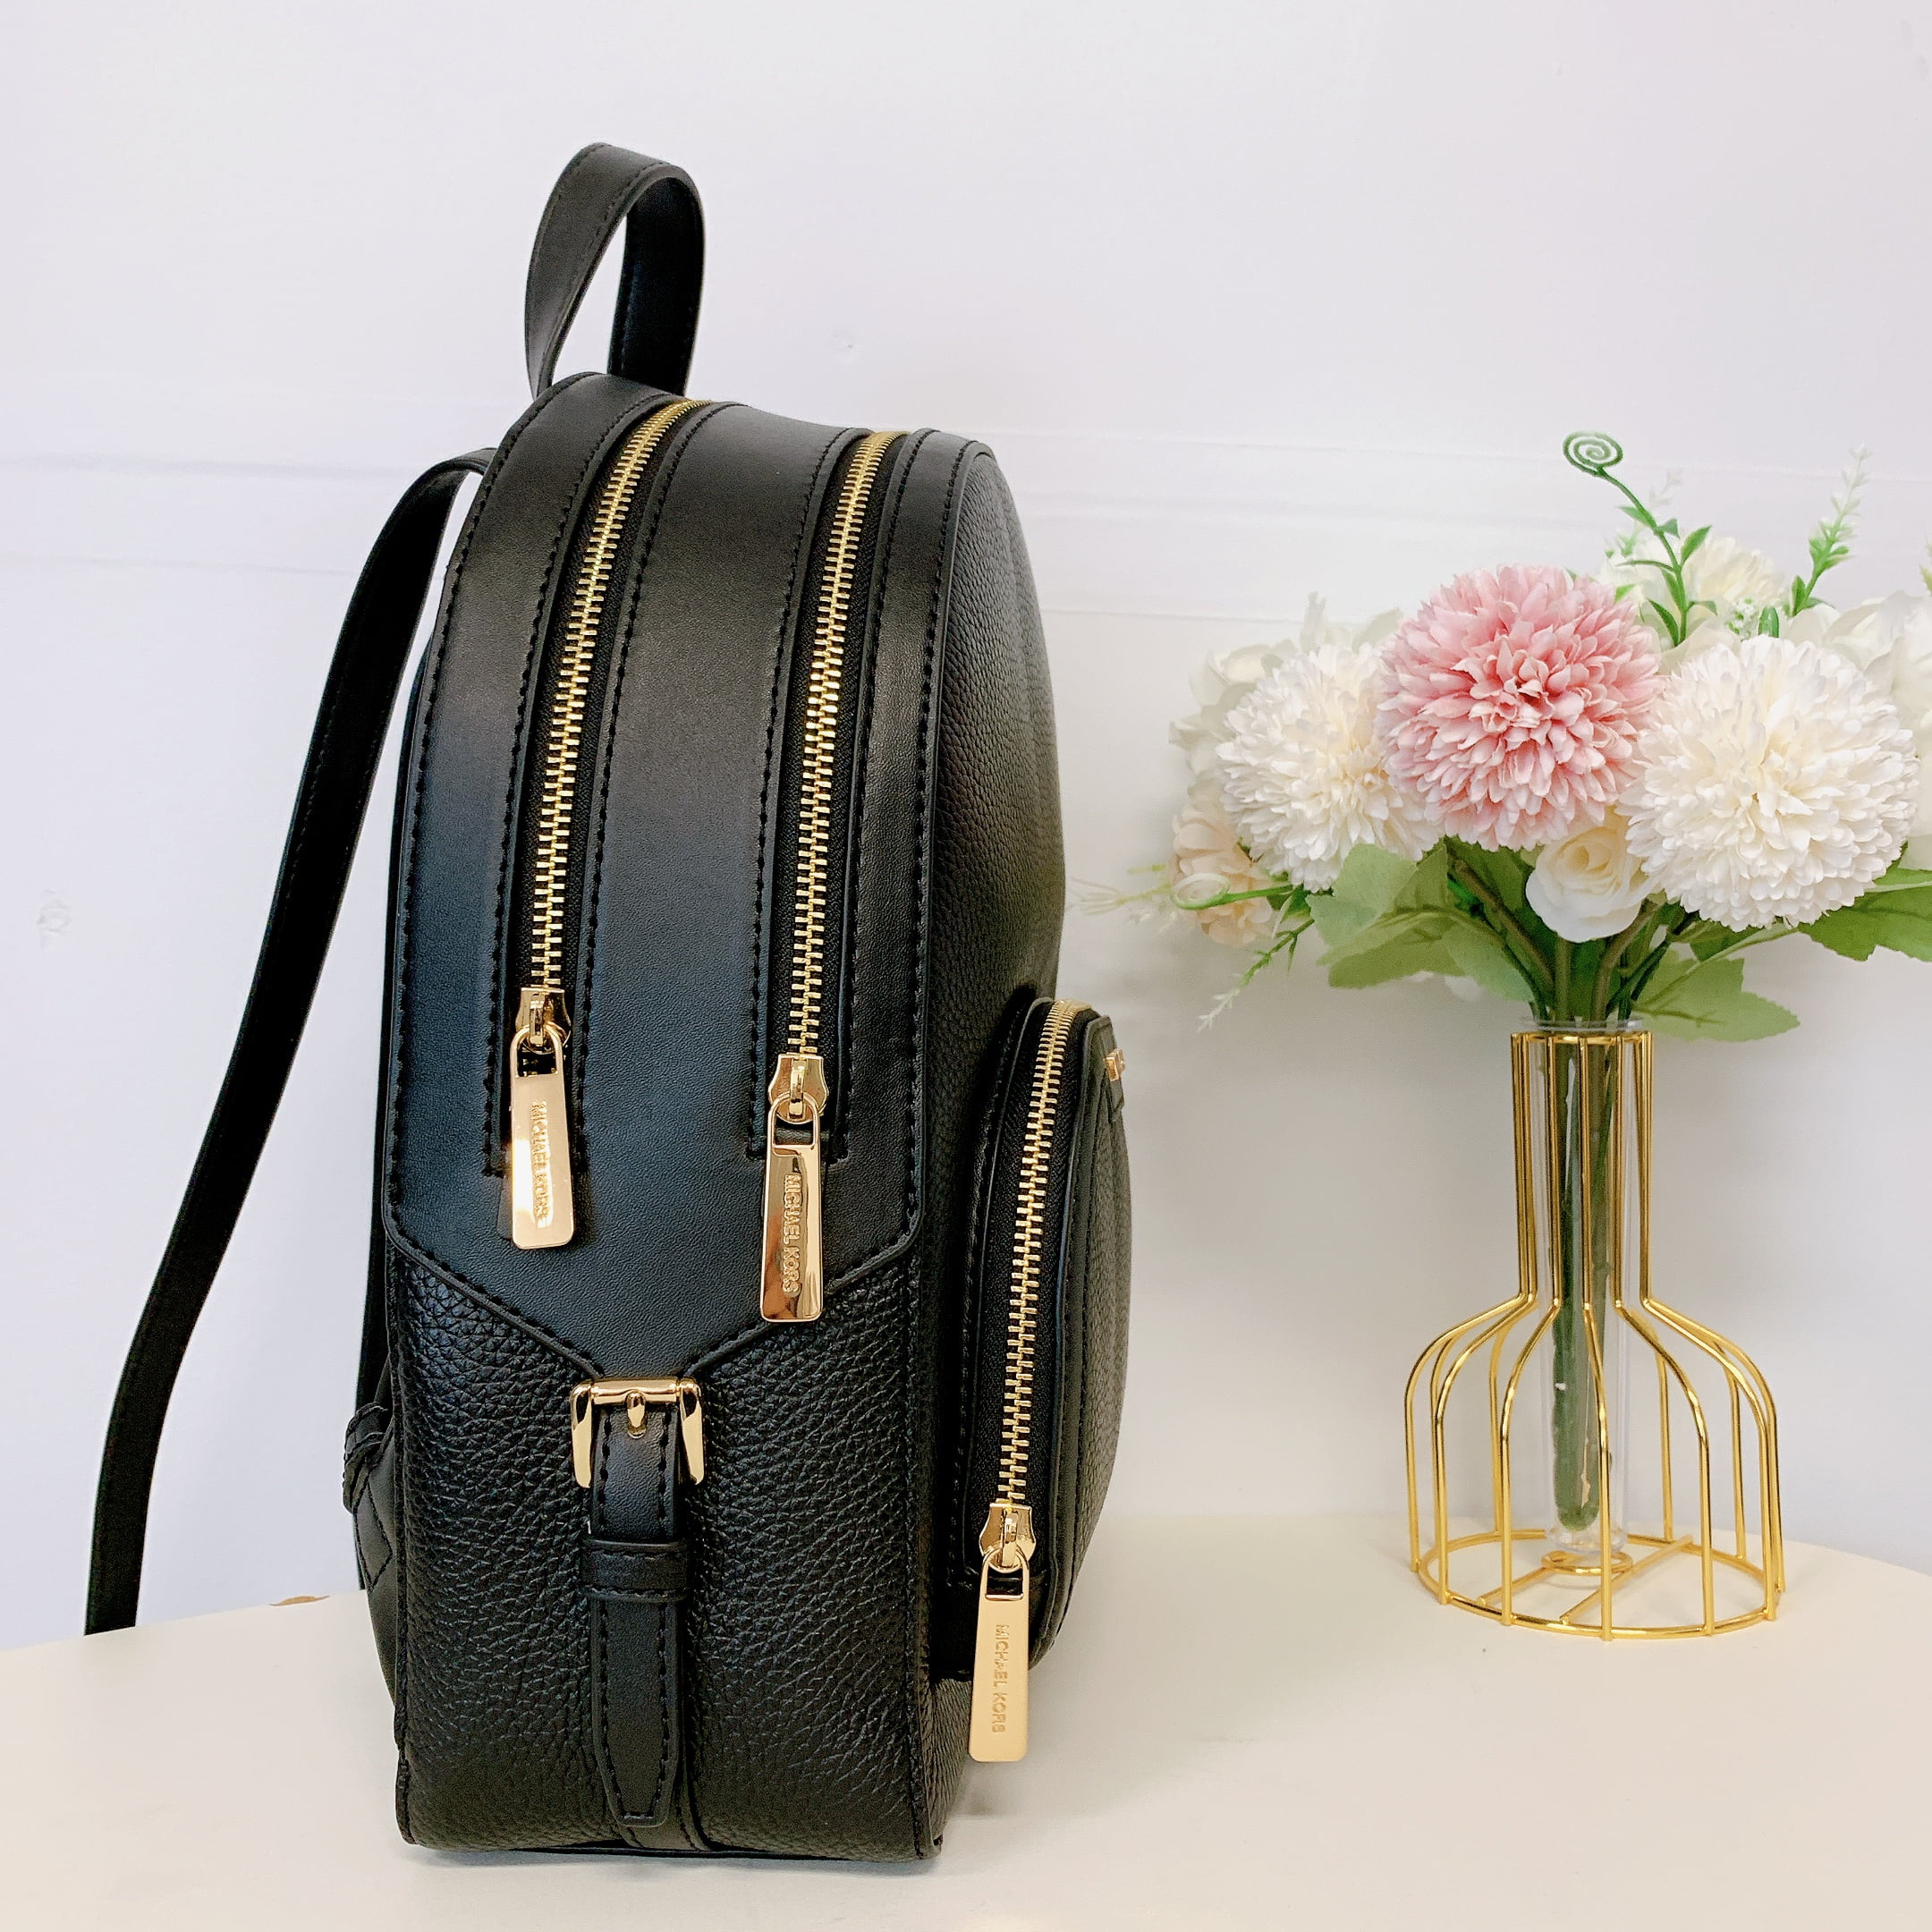 Michael Kors Bags | Michael Kors Jaycee Medium Zip Packed Backpack Light Powder Blush | Color: Gold/Pink | Size: Os | Walletsandbags's Closet